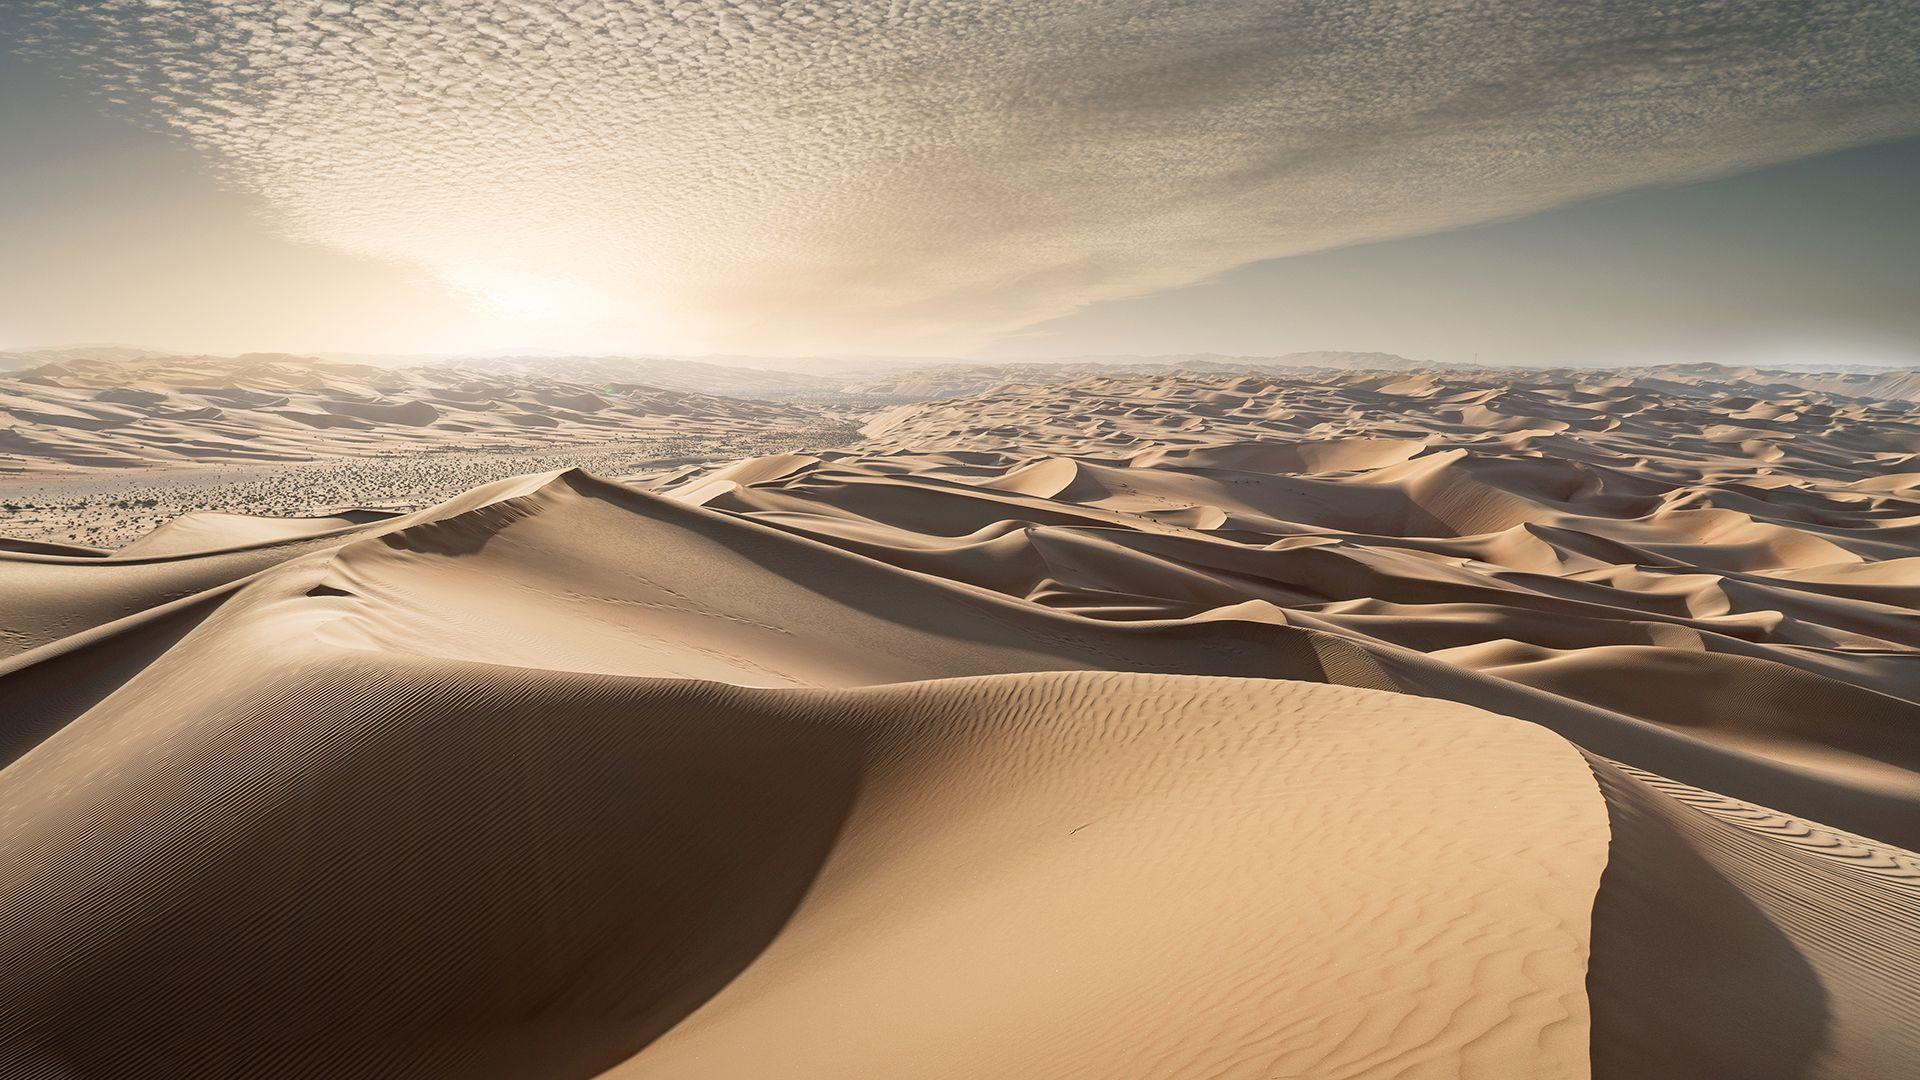 The Empty Quarter, or Rub al Khali, the world's largest sand desert